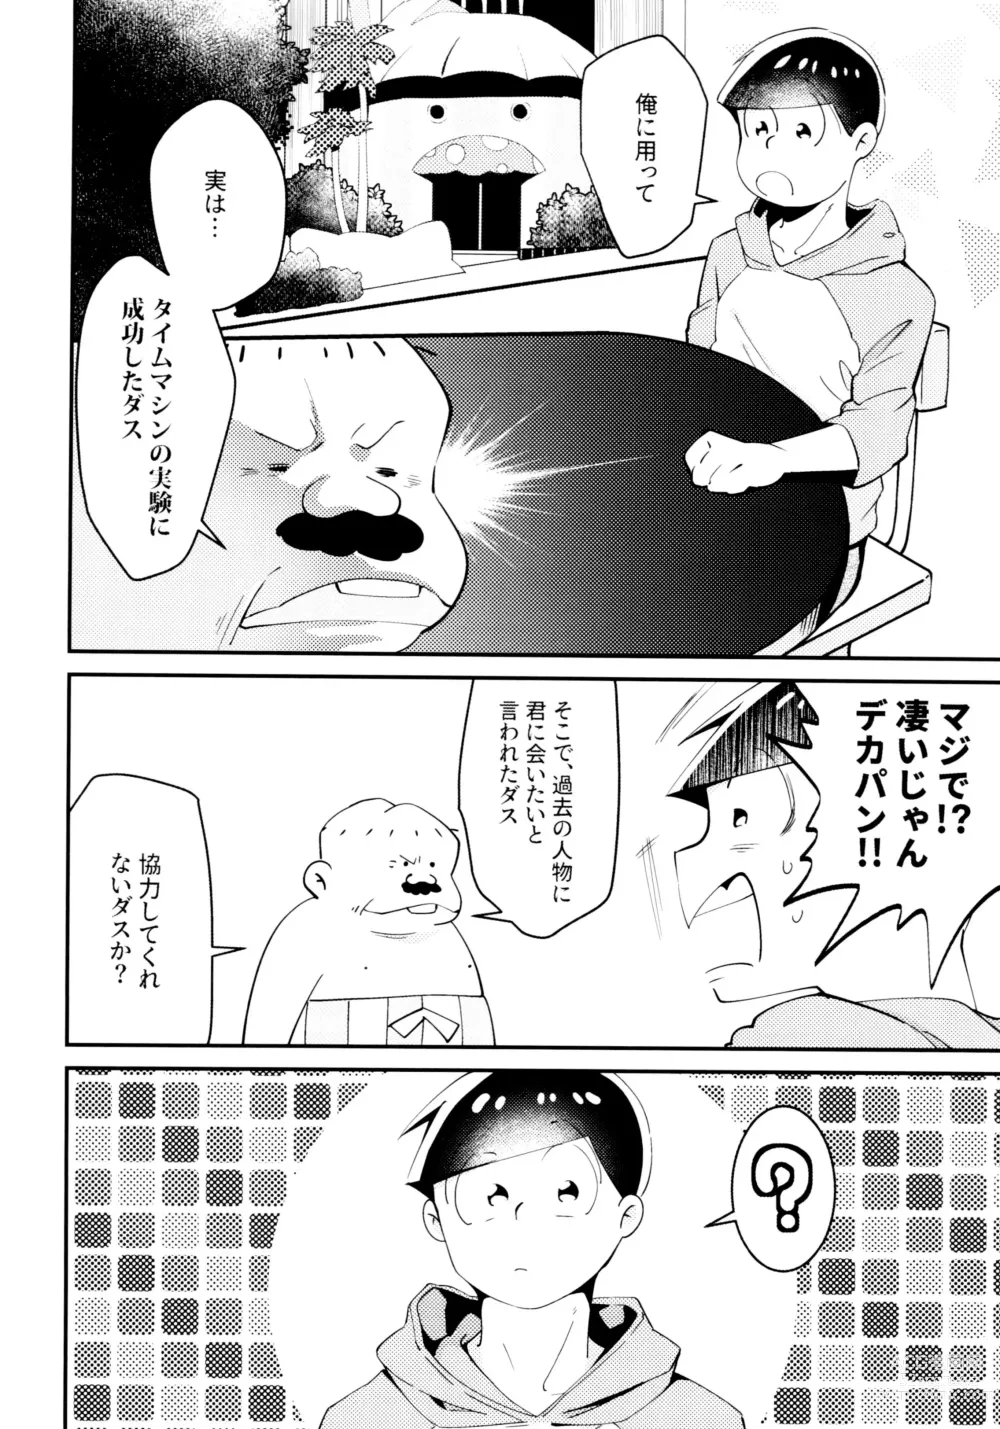 Page 3 of doujinshi Cherry boy END